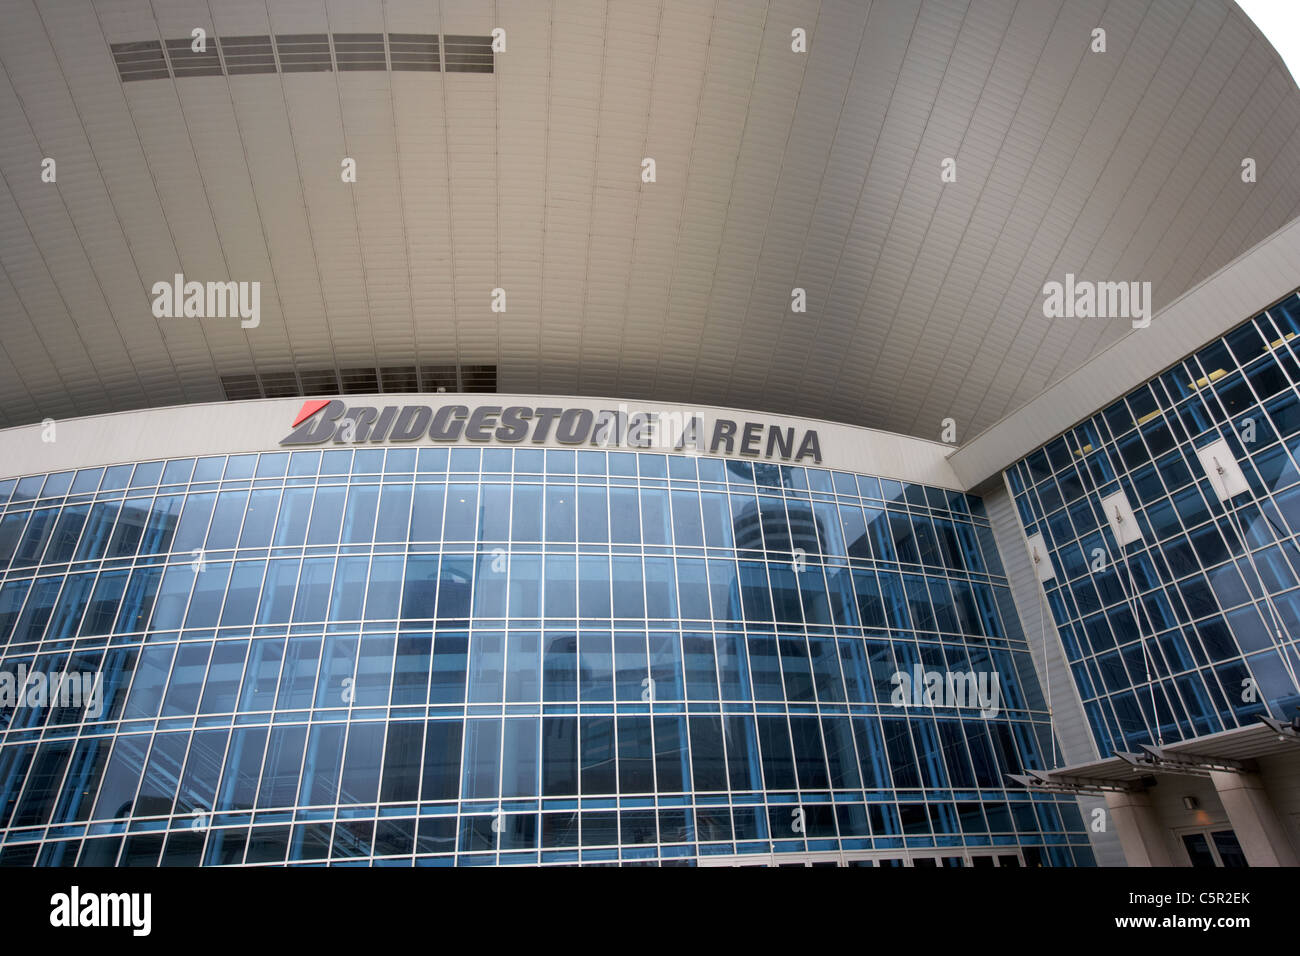 Bridgestone arena hi-res stock photography and images - Alamy